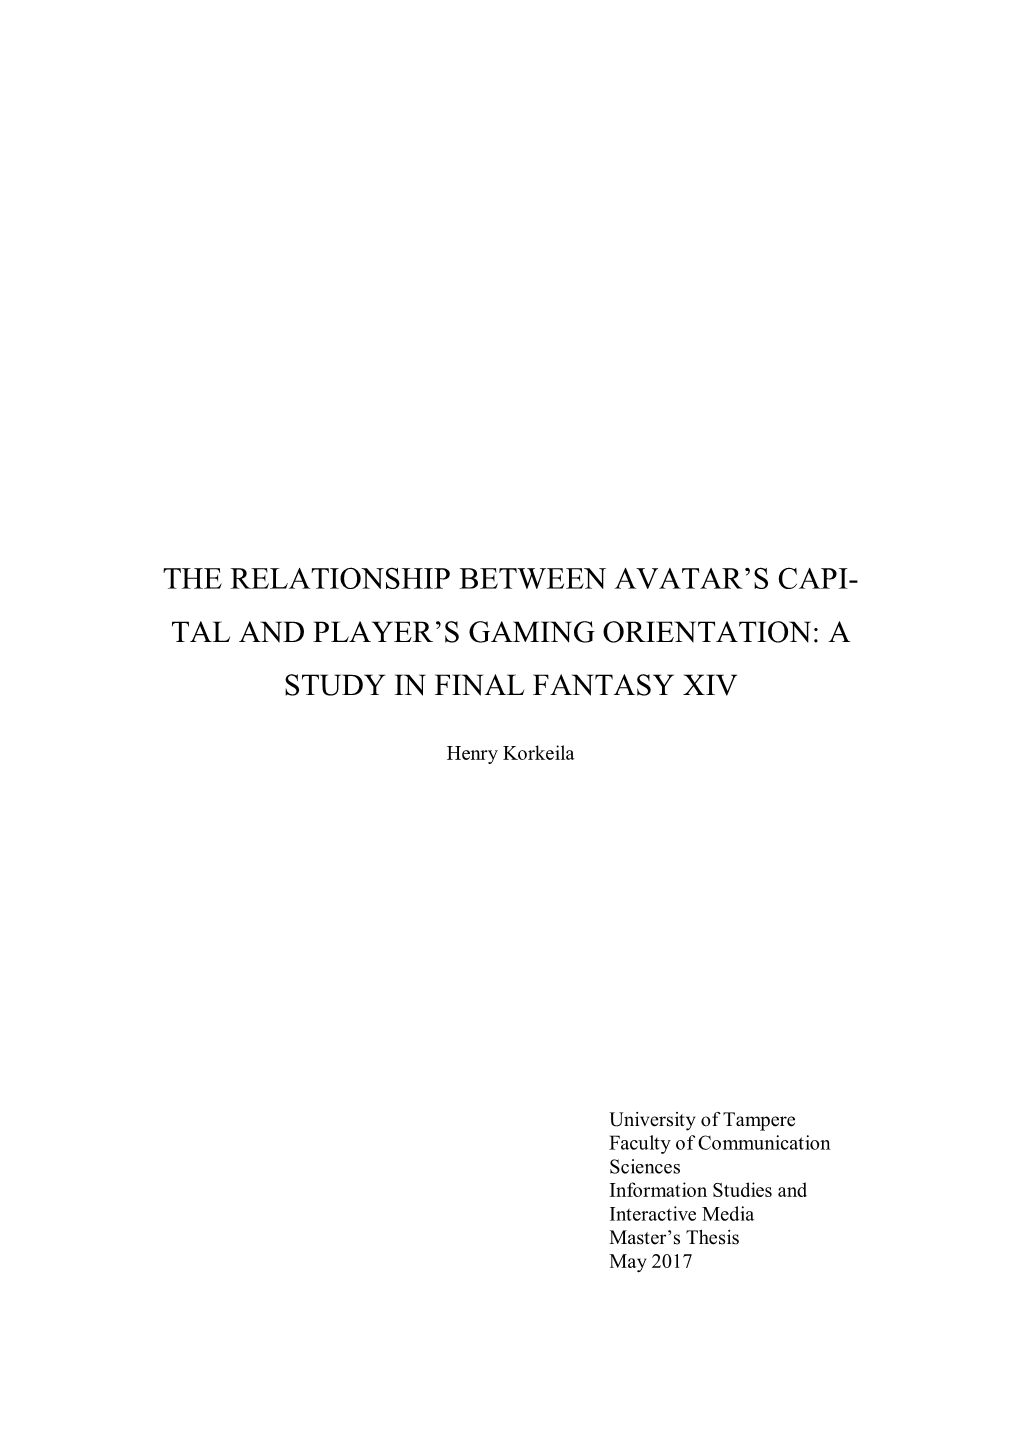 A Study in Final Fantasy Xiv